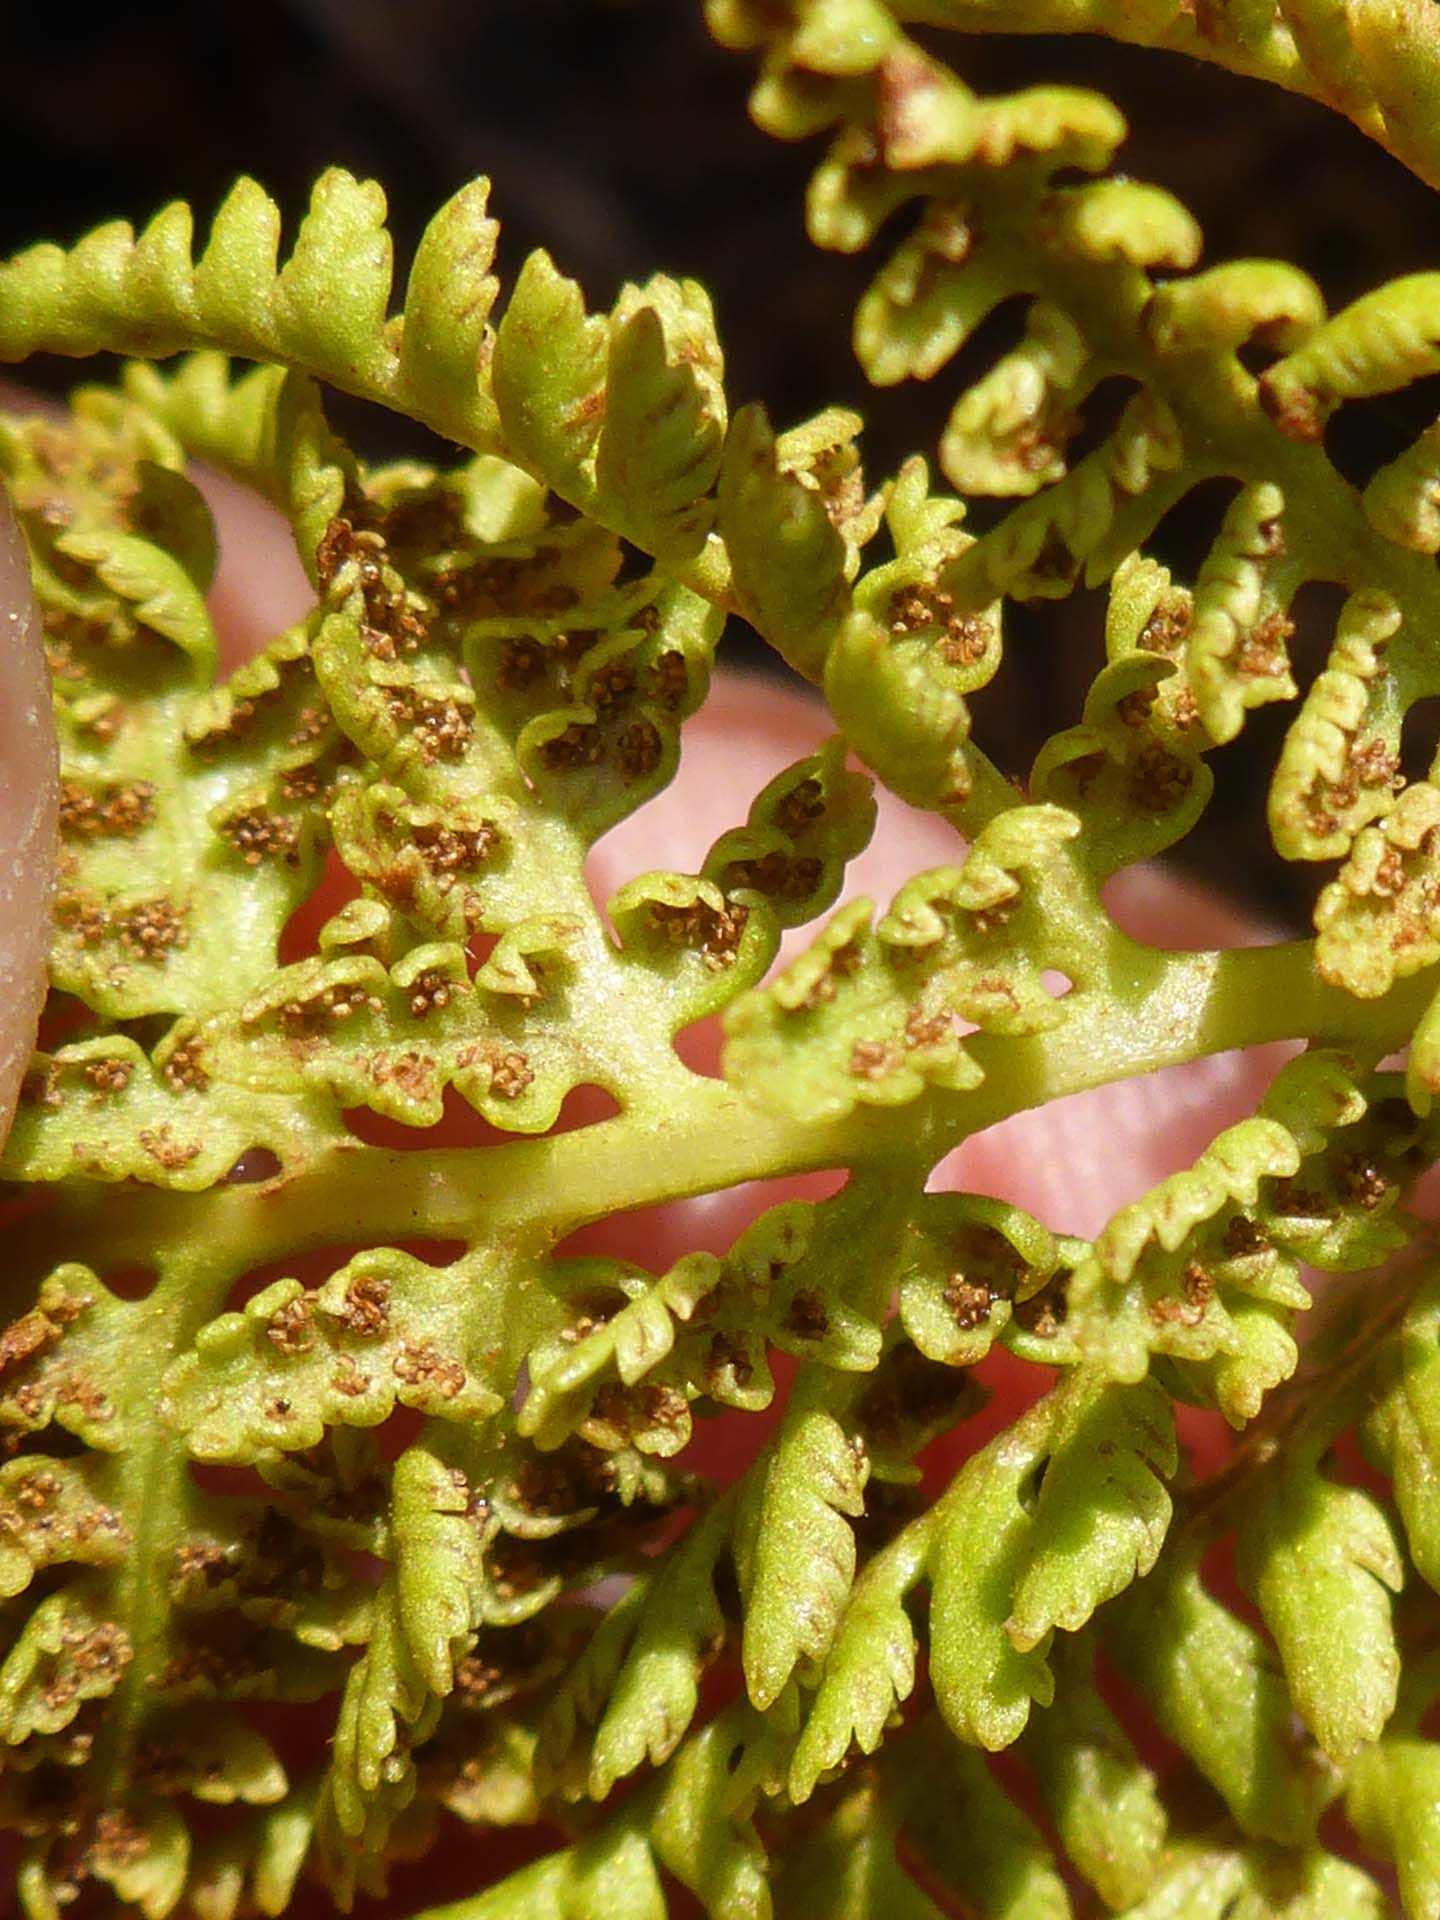 Alpine lady fern spores. D. Burk.